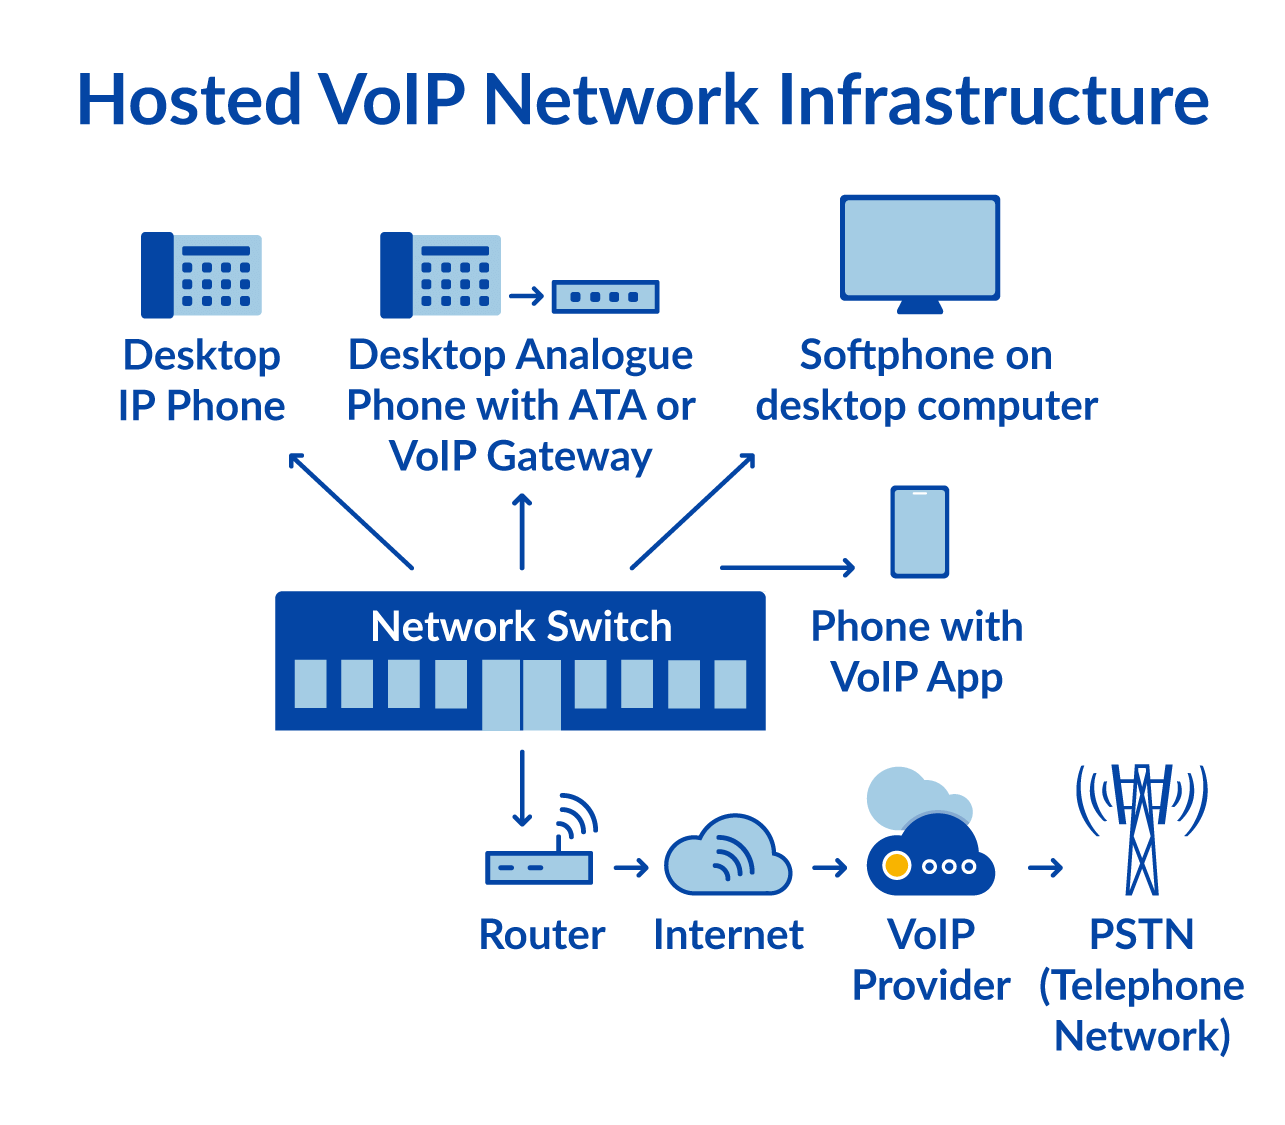 Diagram Infrastruktur VoIP yang Dihosting (2019)